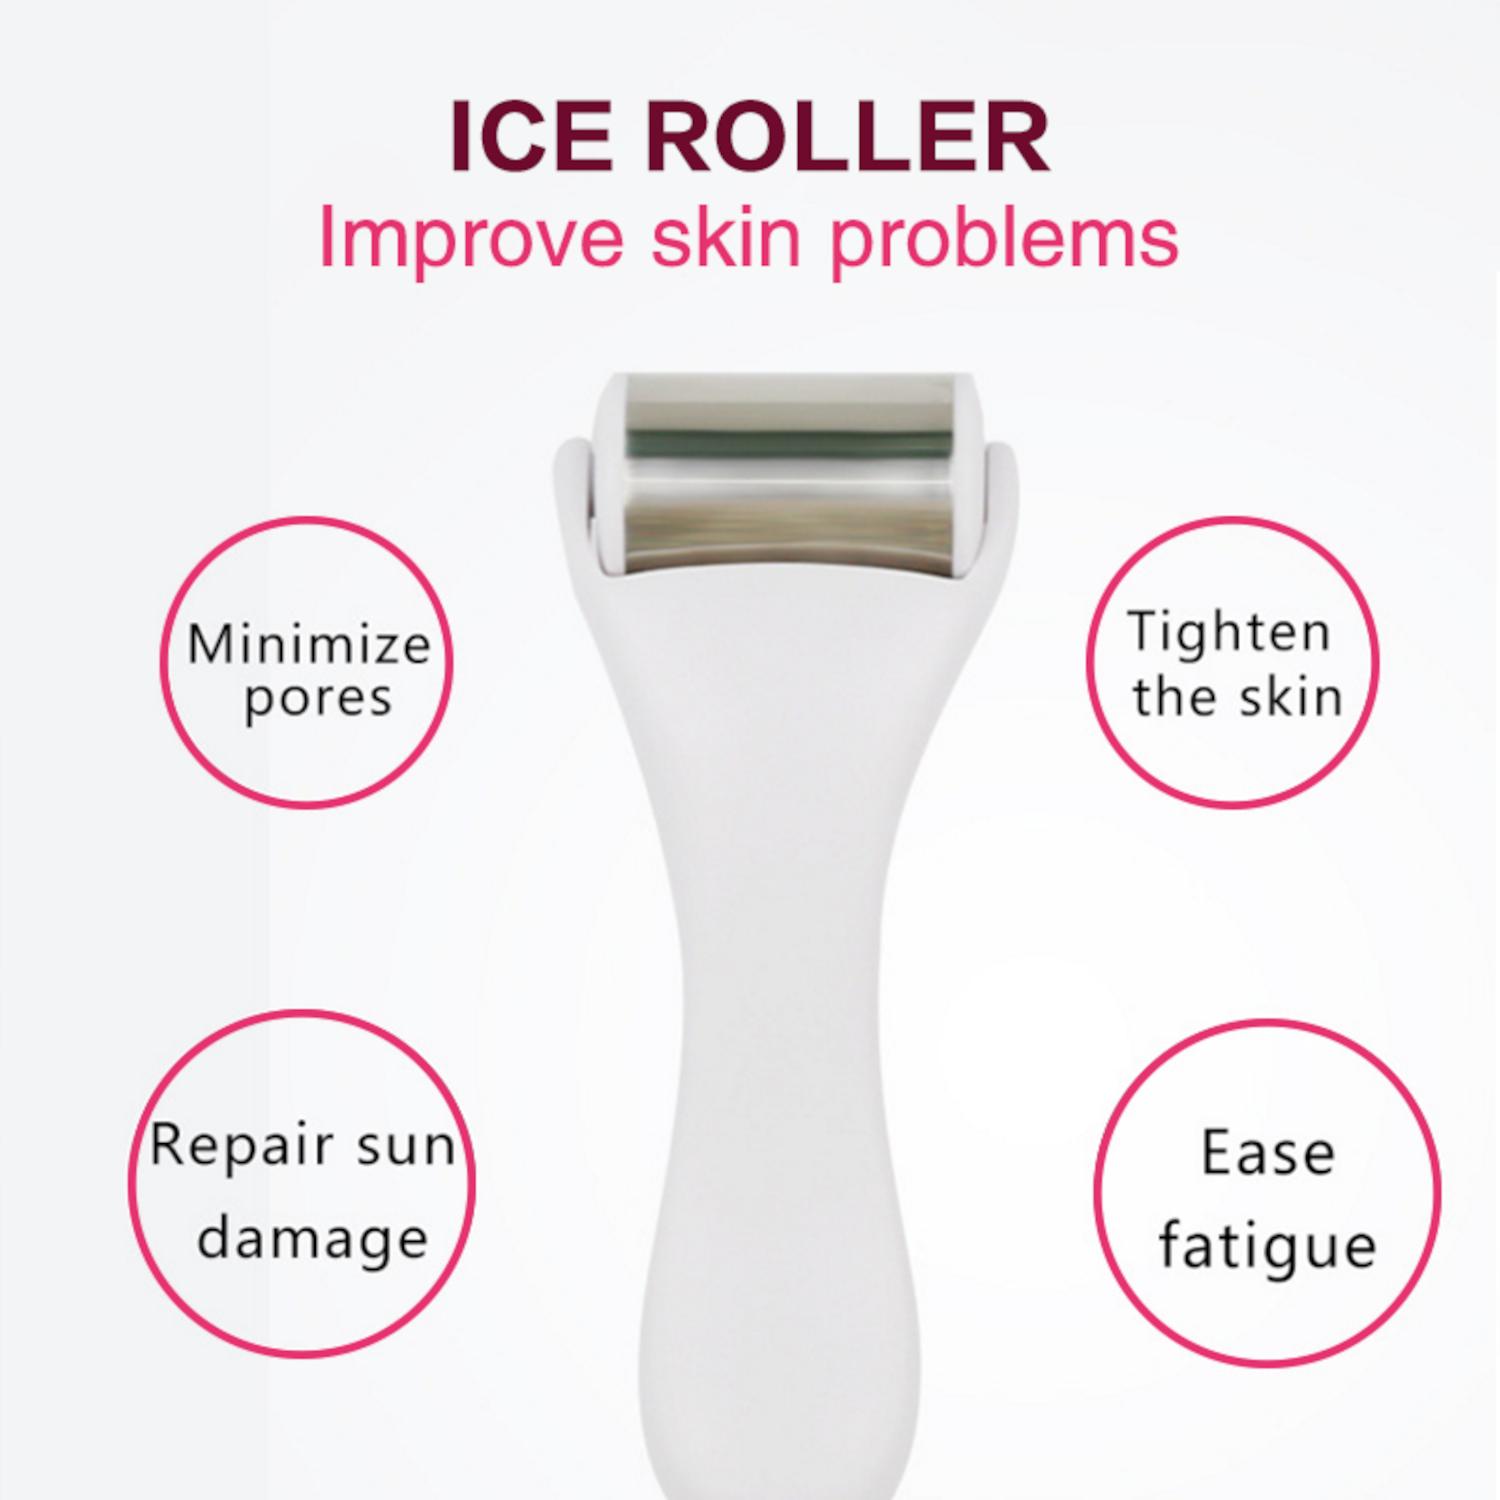 ice roller benefits